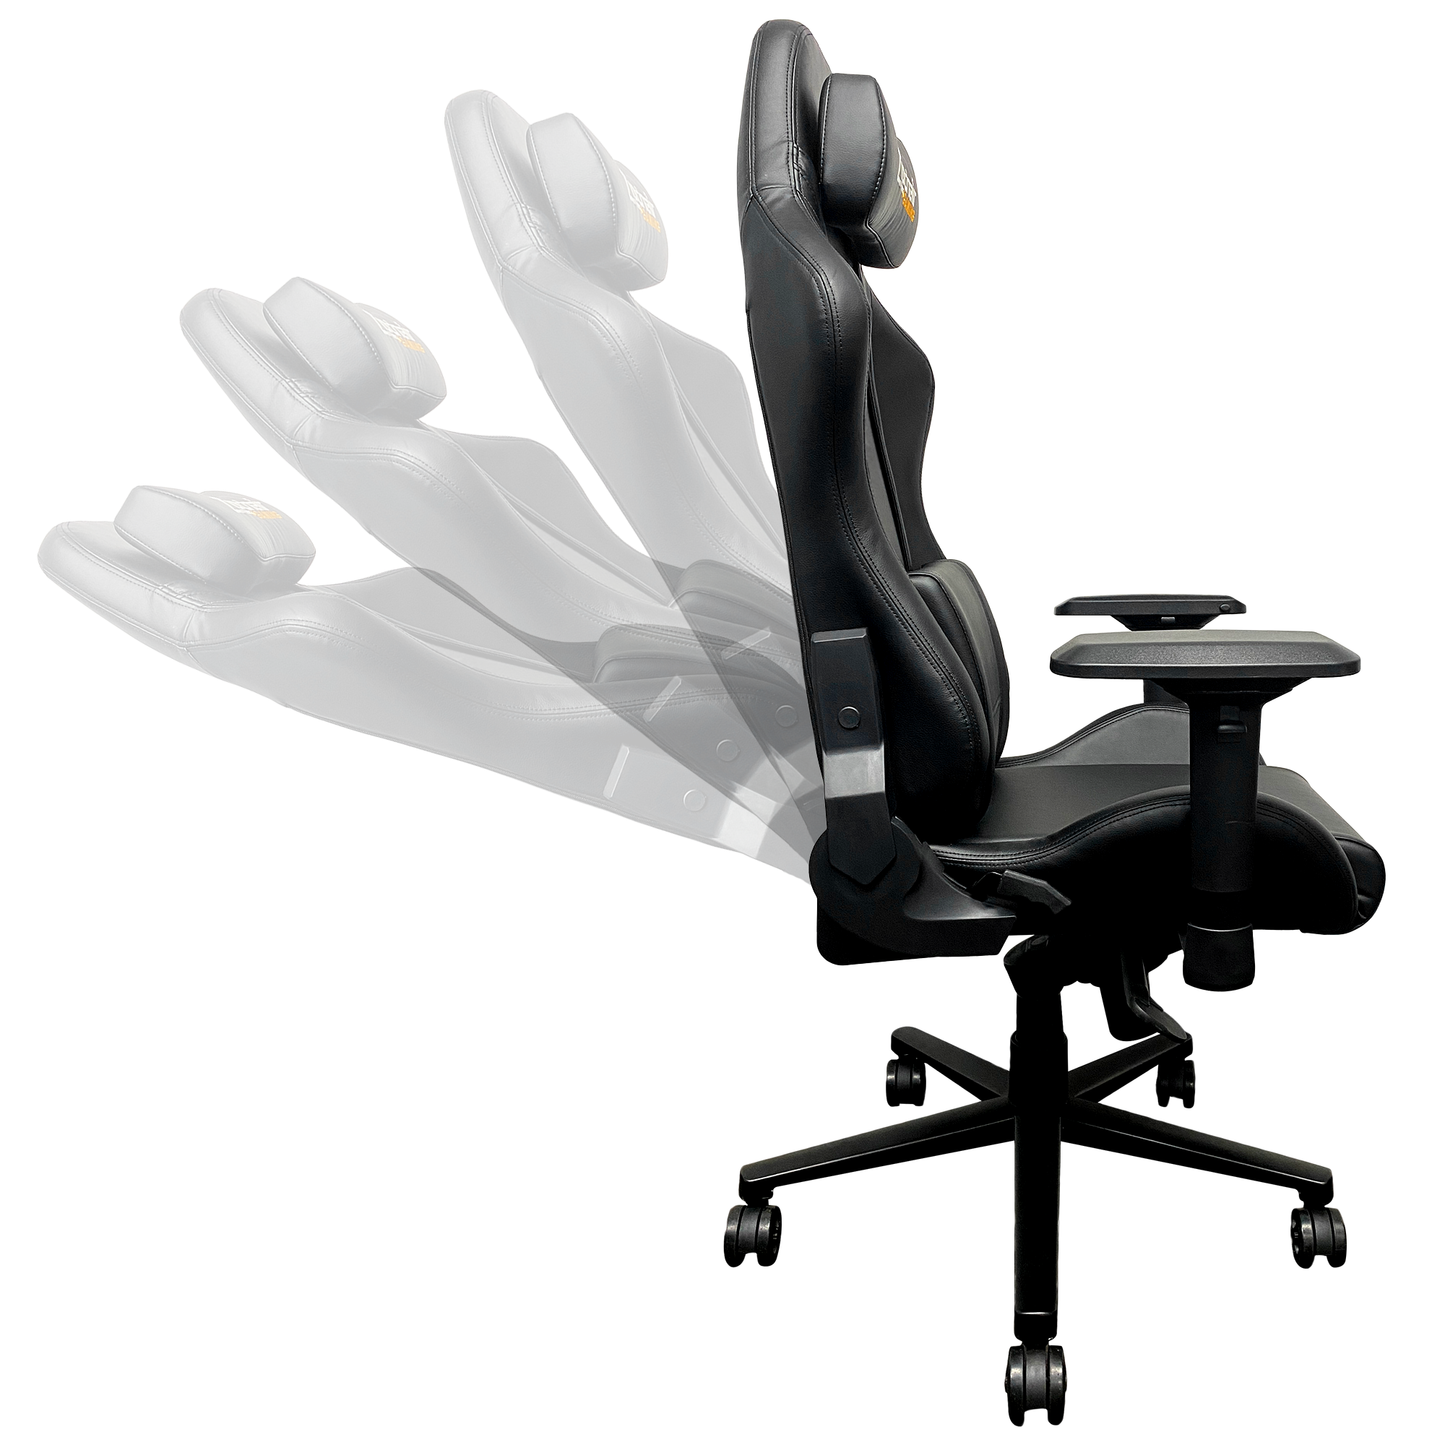 Xpression Pro Gaming Chair with Ottawa Senators Secondary Logo